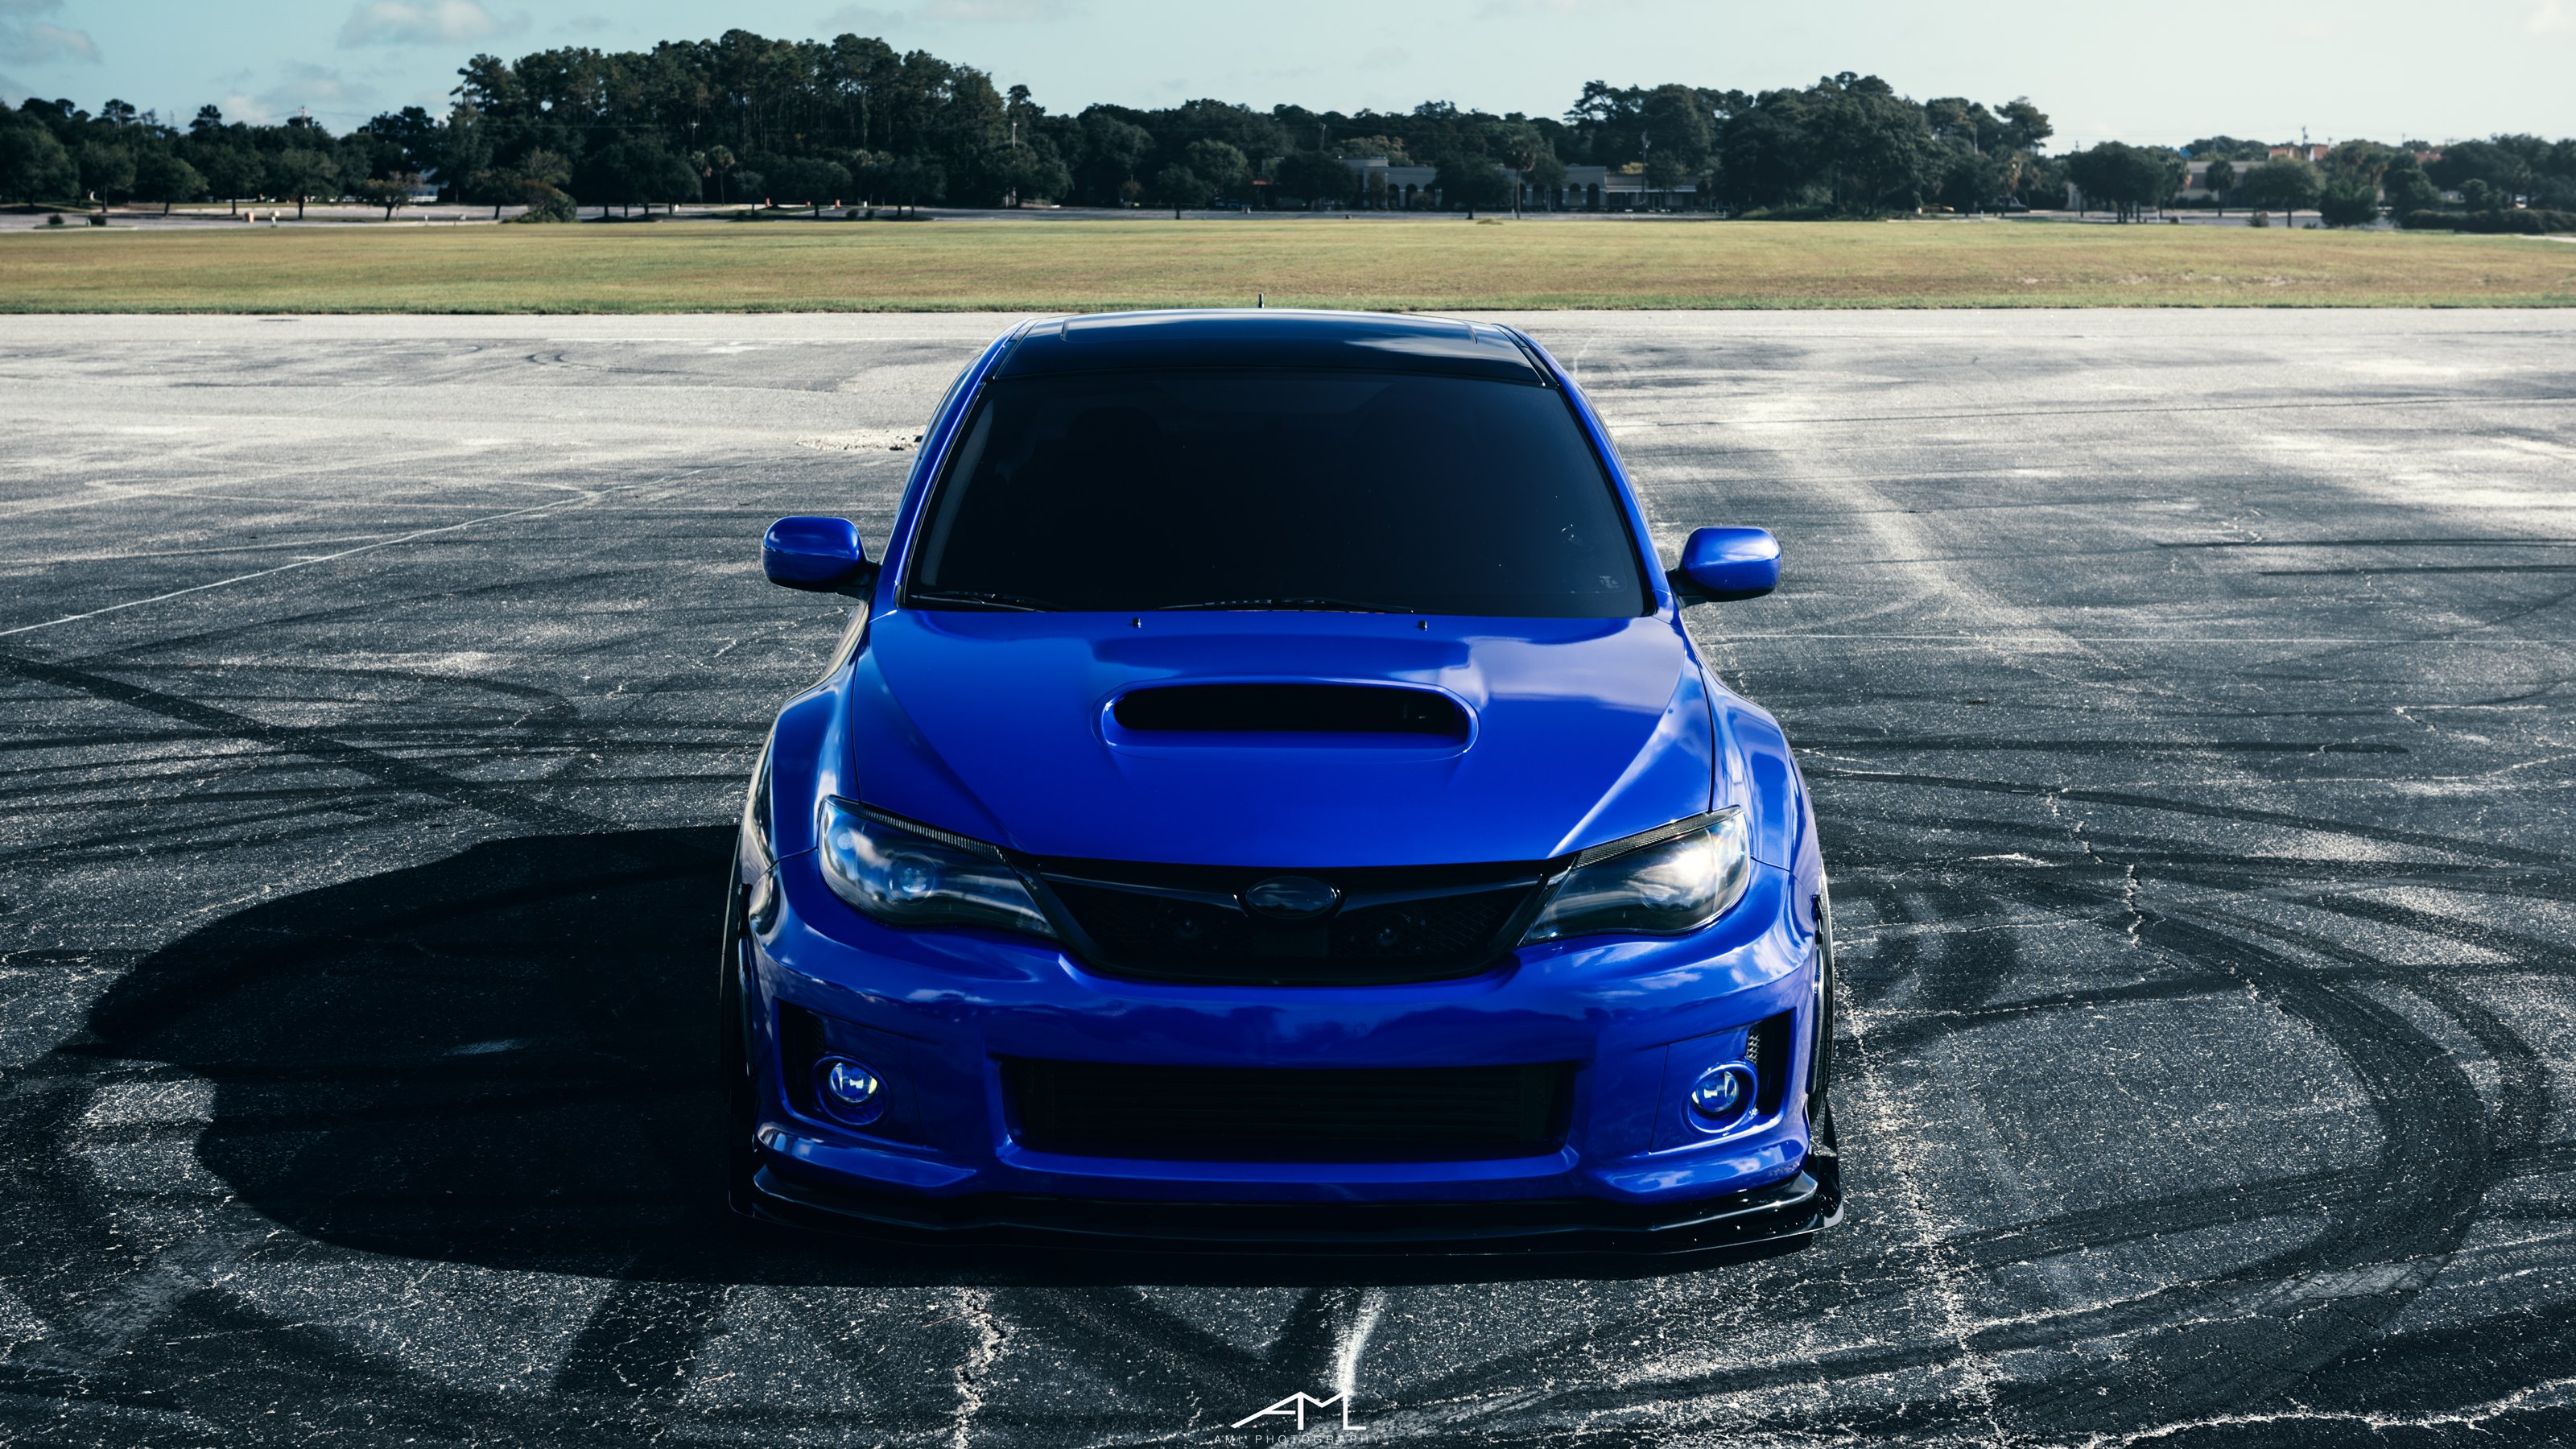 Custom Vented Hood on Blue Stanced Subaru WRX - Photo by Arlen Liverman